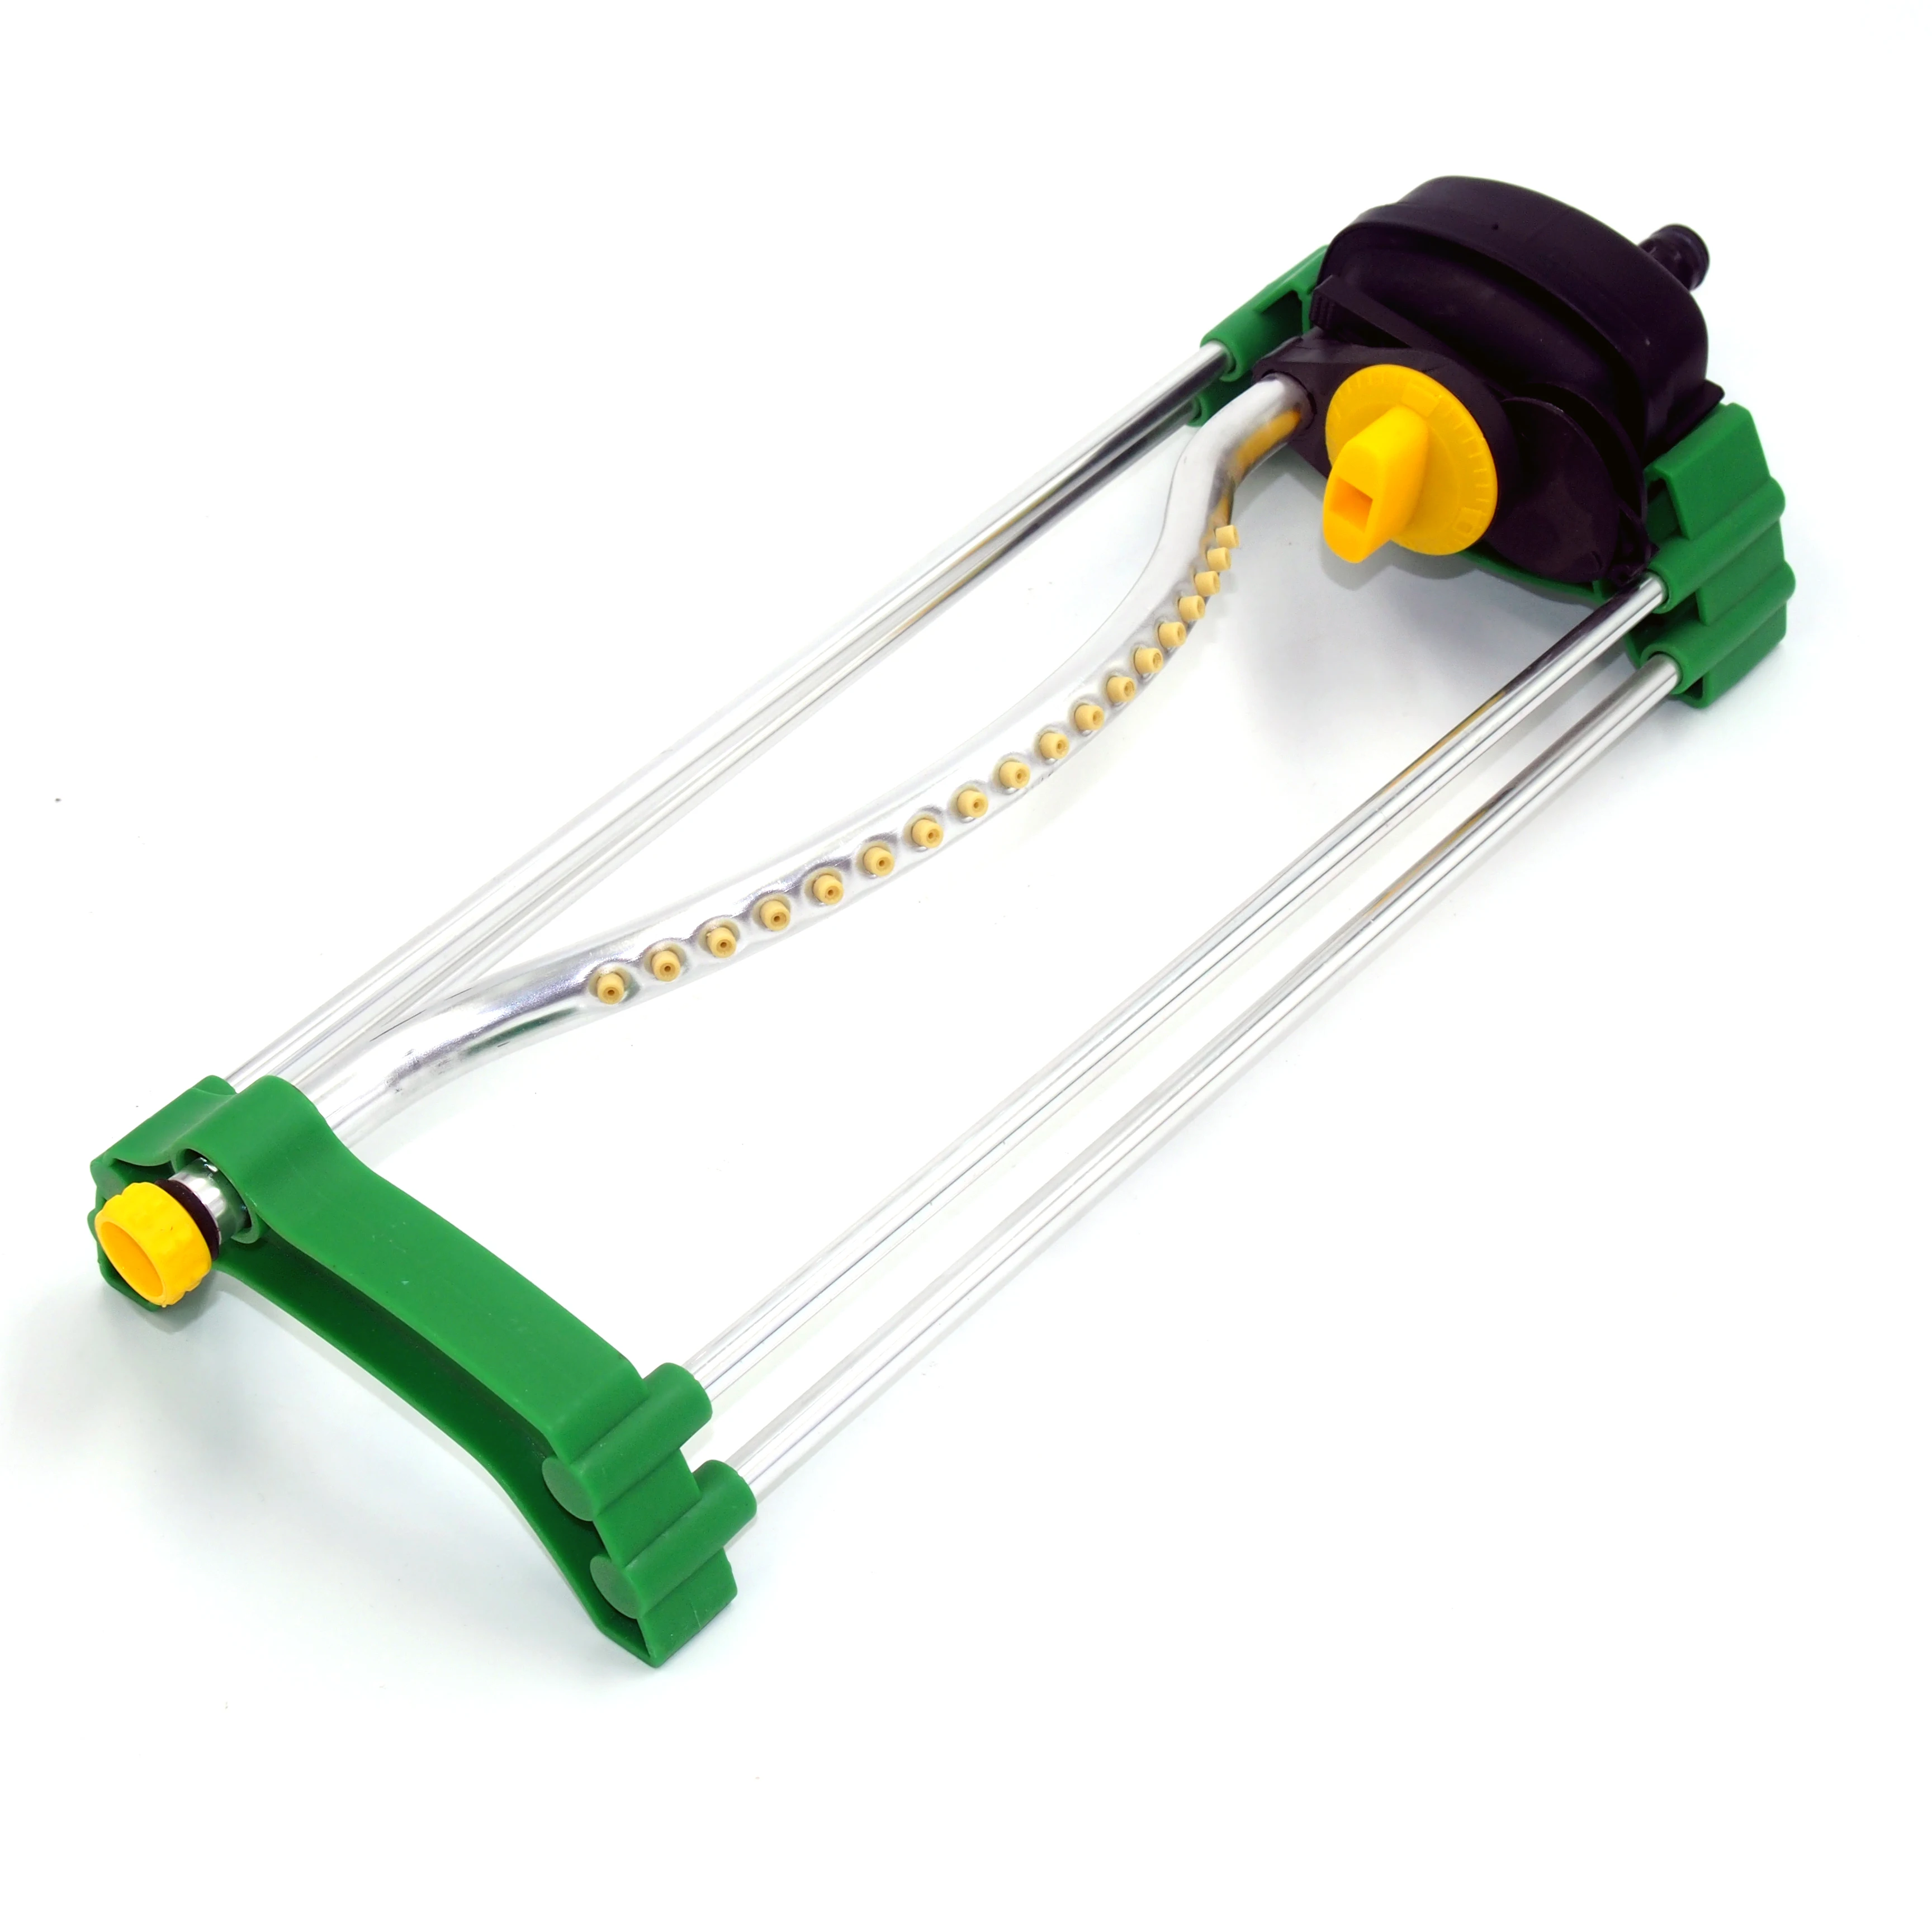 18 holes plastic jet water oscillating sprinkler for lawn